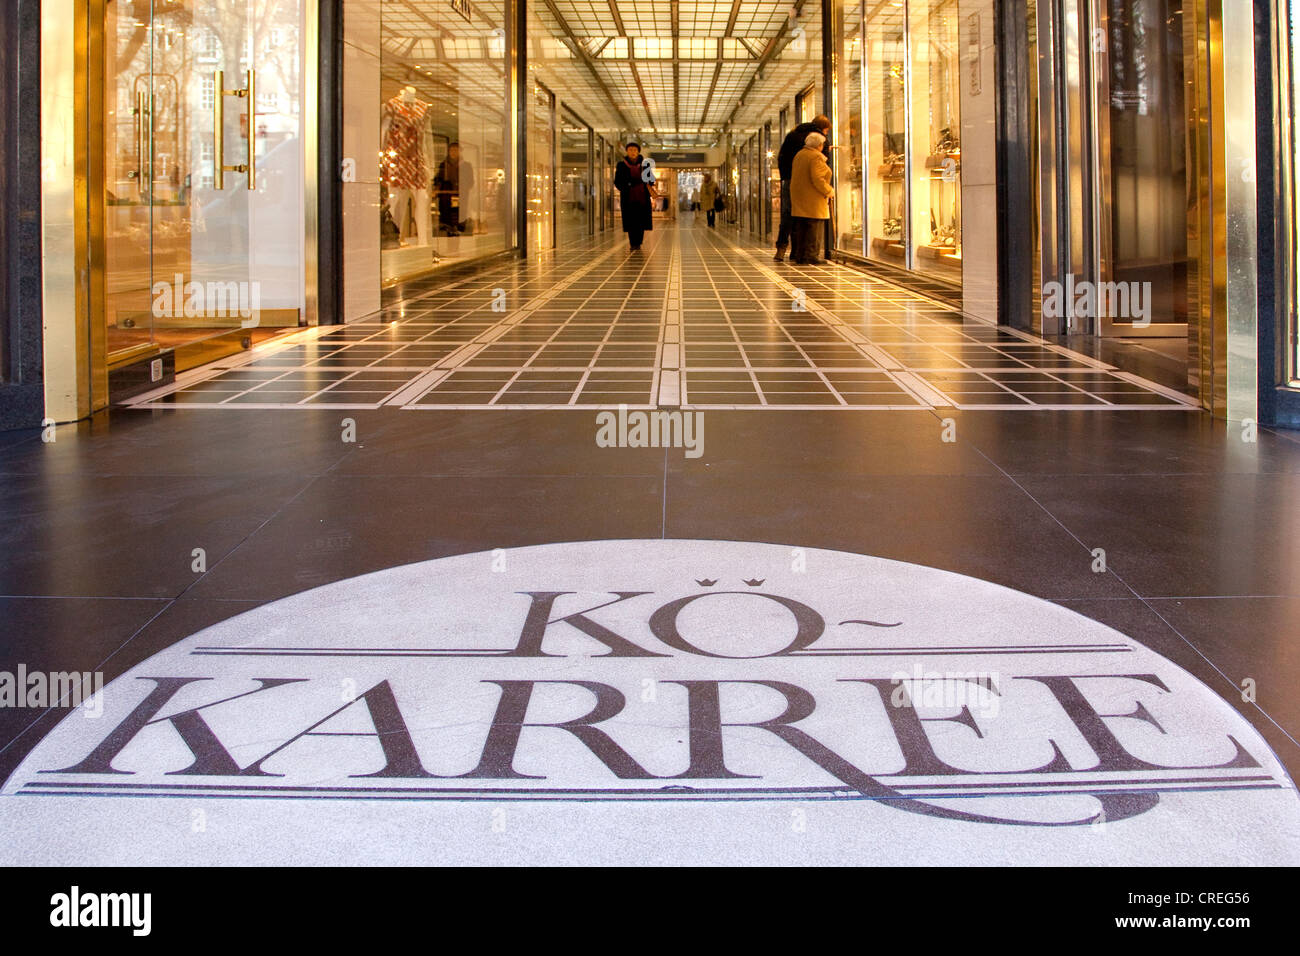 Koe-Karree shopping arcade on the Koe or Koenigsallee shopping promenade, Duesseldorf, North Rhine-Westphalia, Germany, Europe Stock Photo